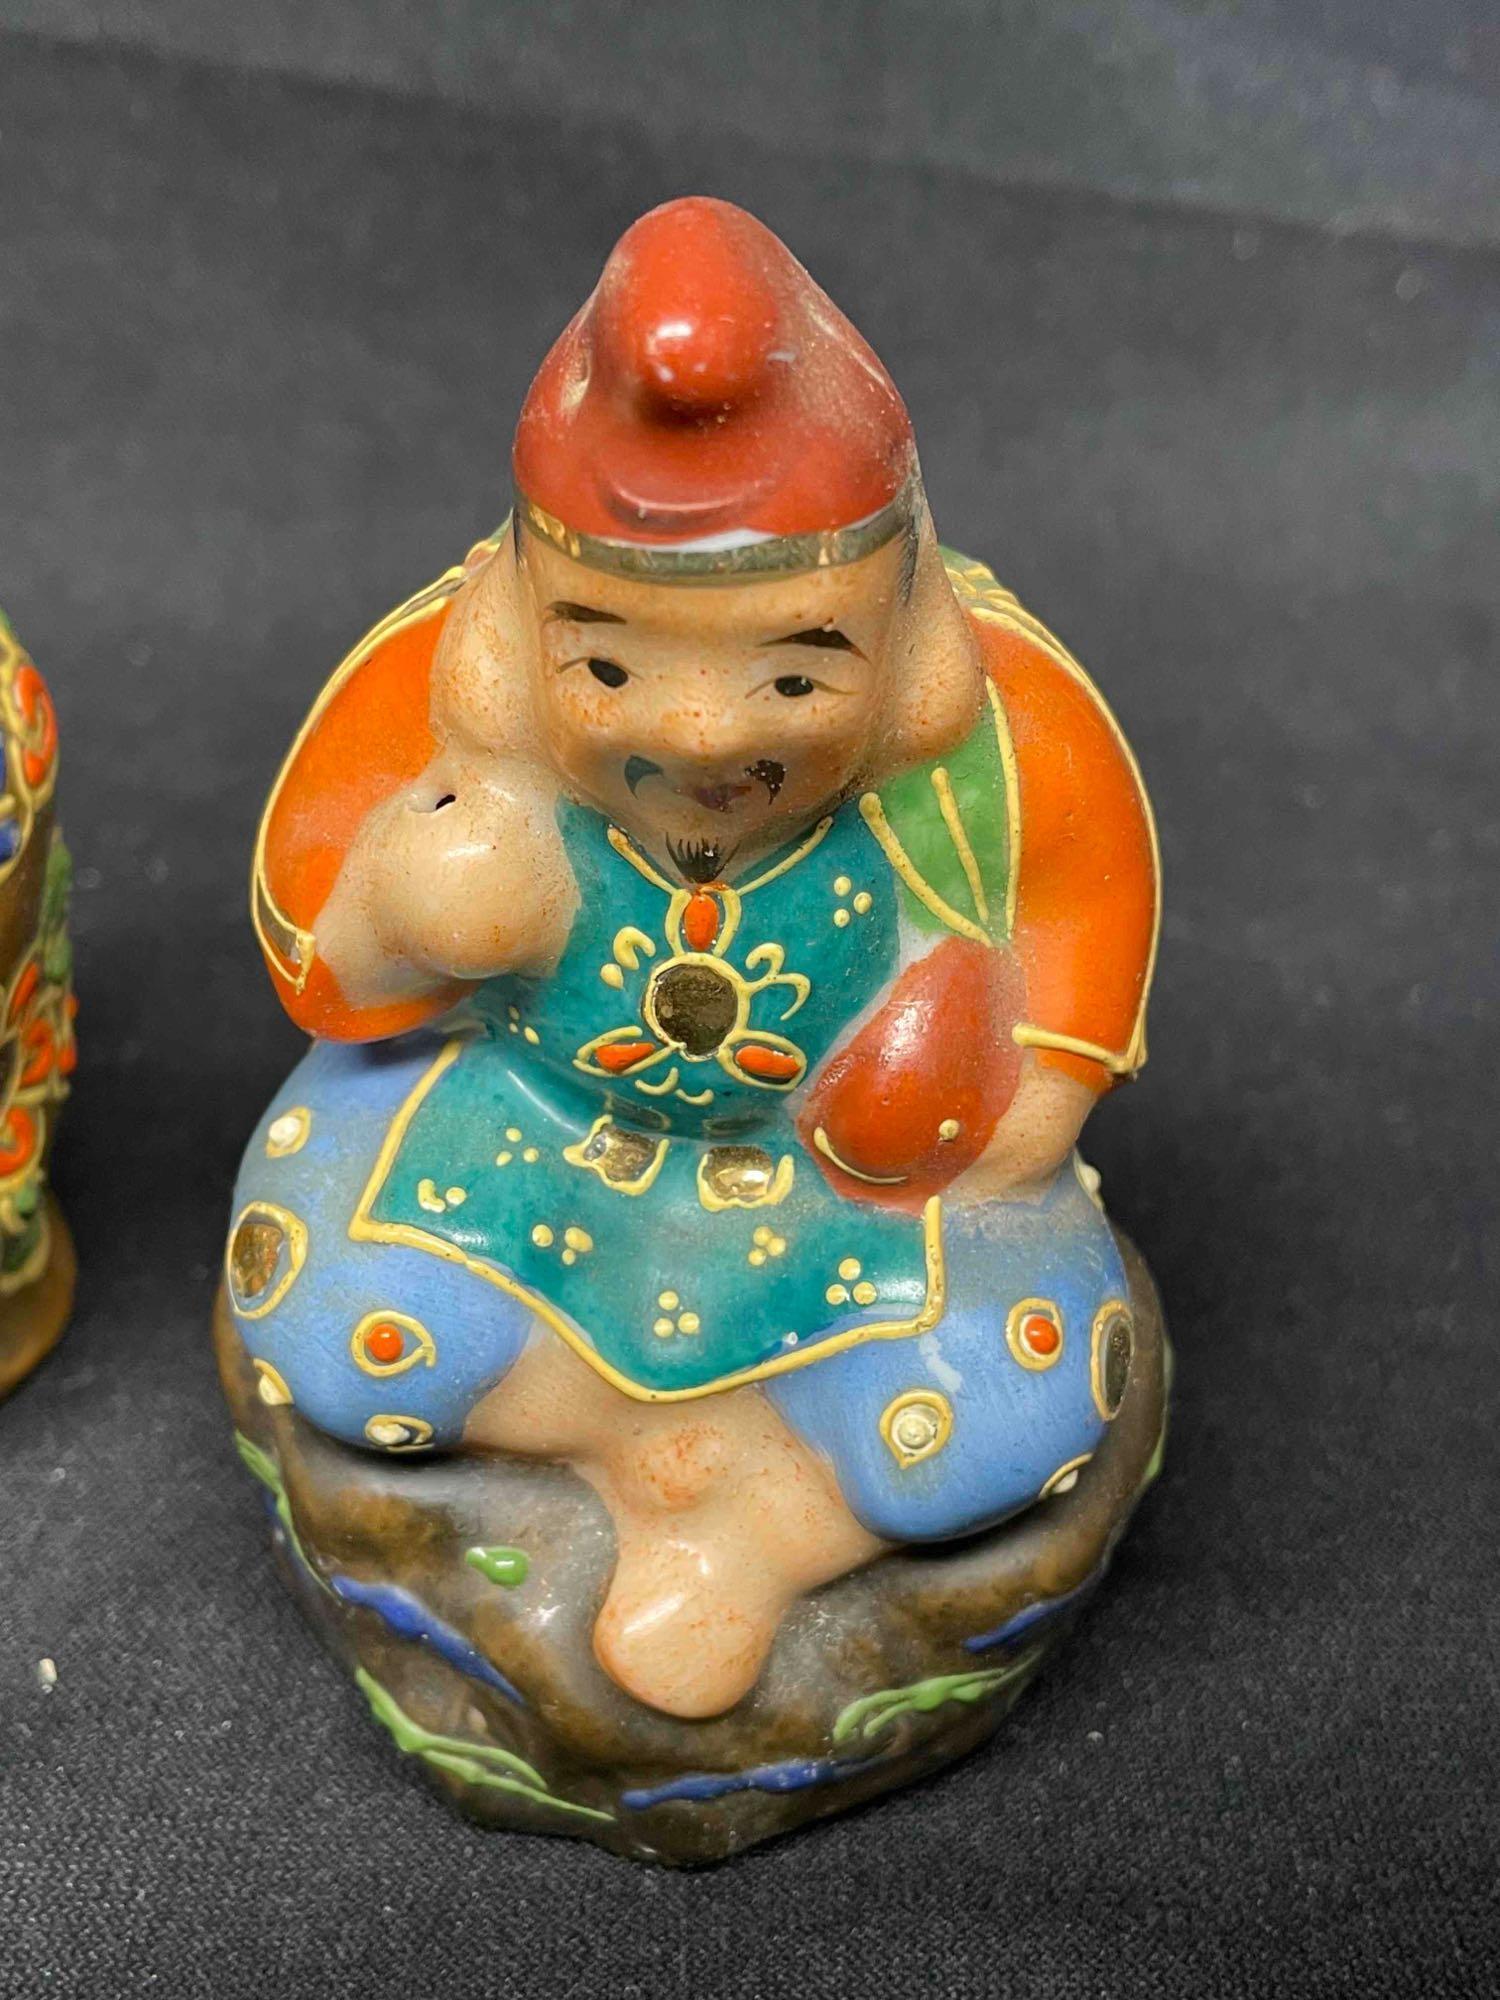 Vintage Antique Japanese, Kutani Porcelain Figurines